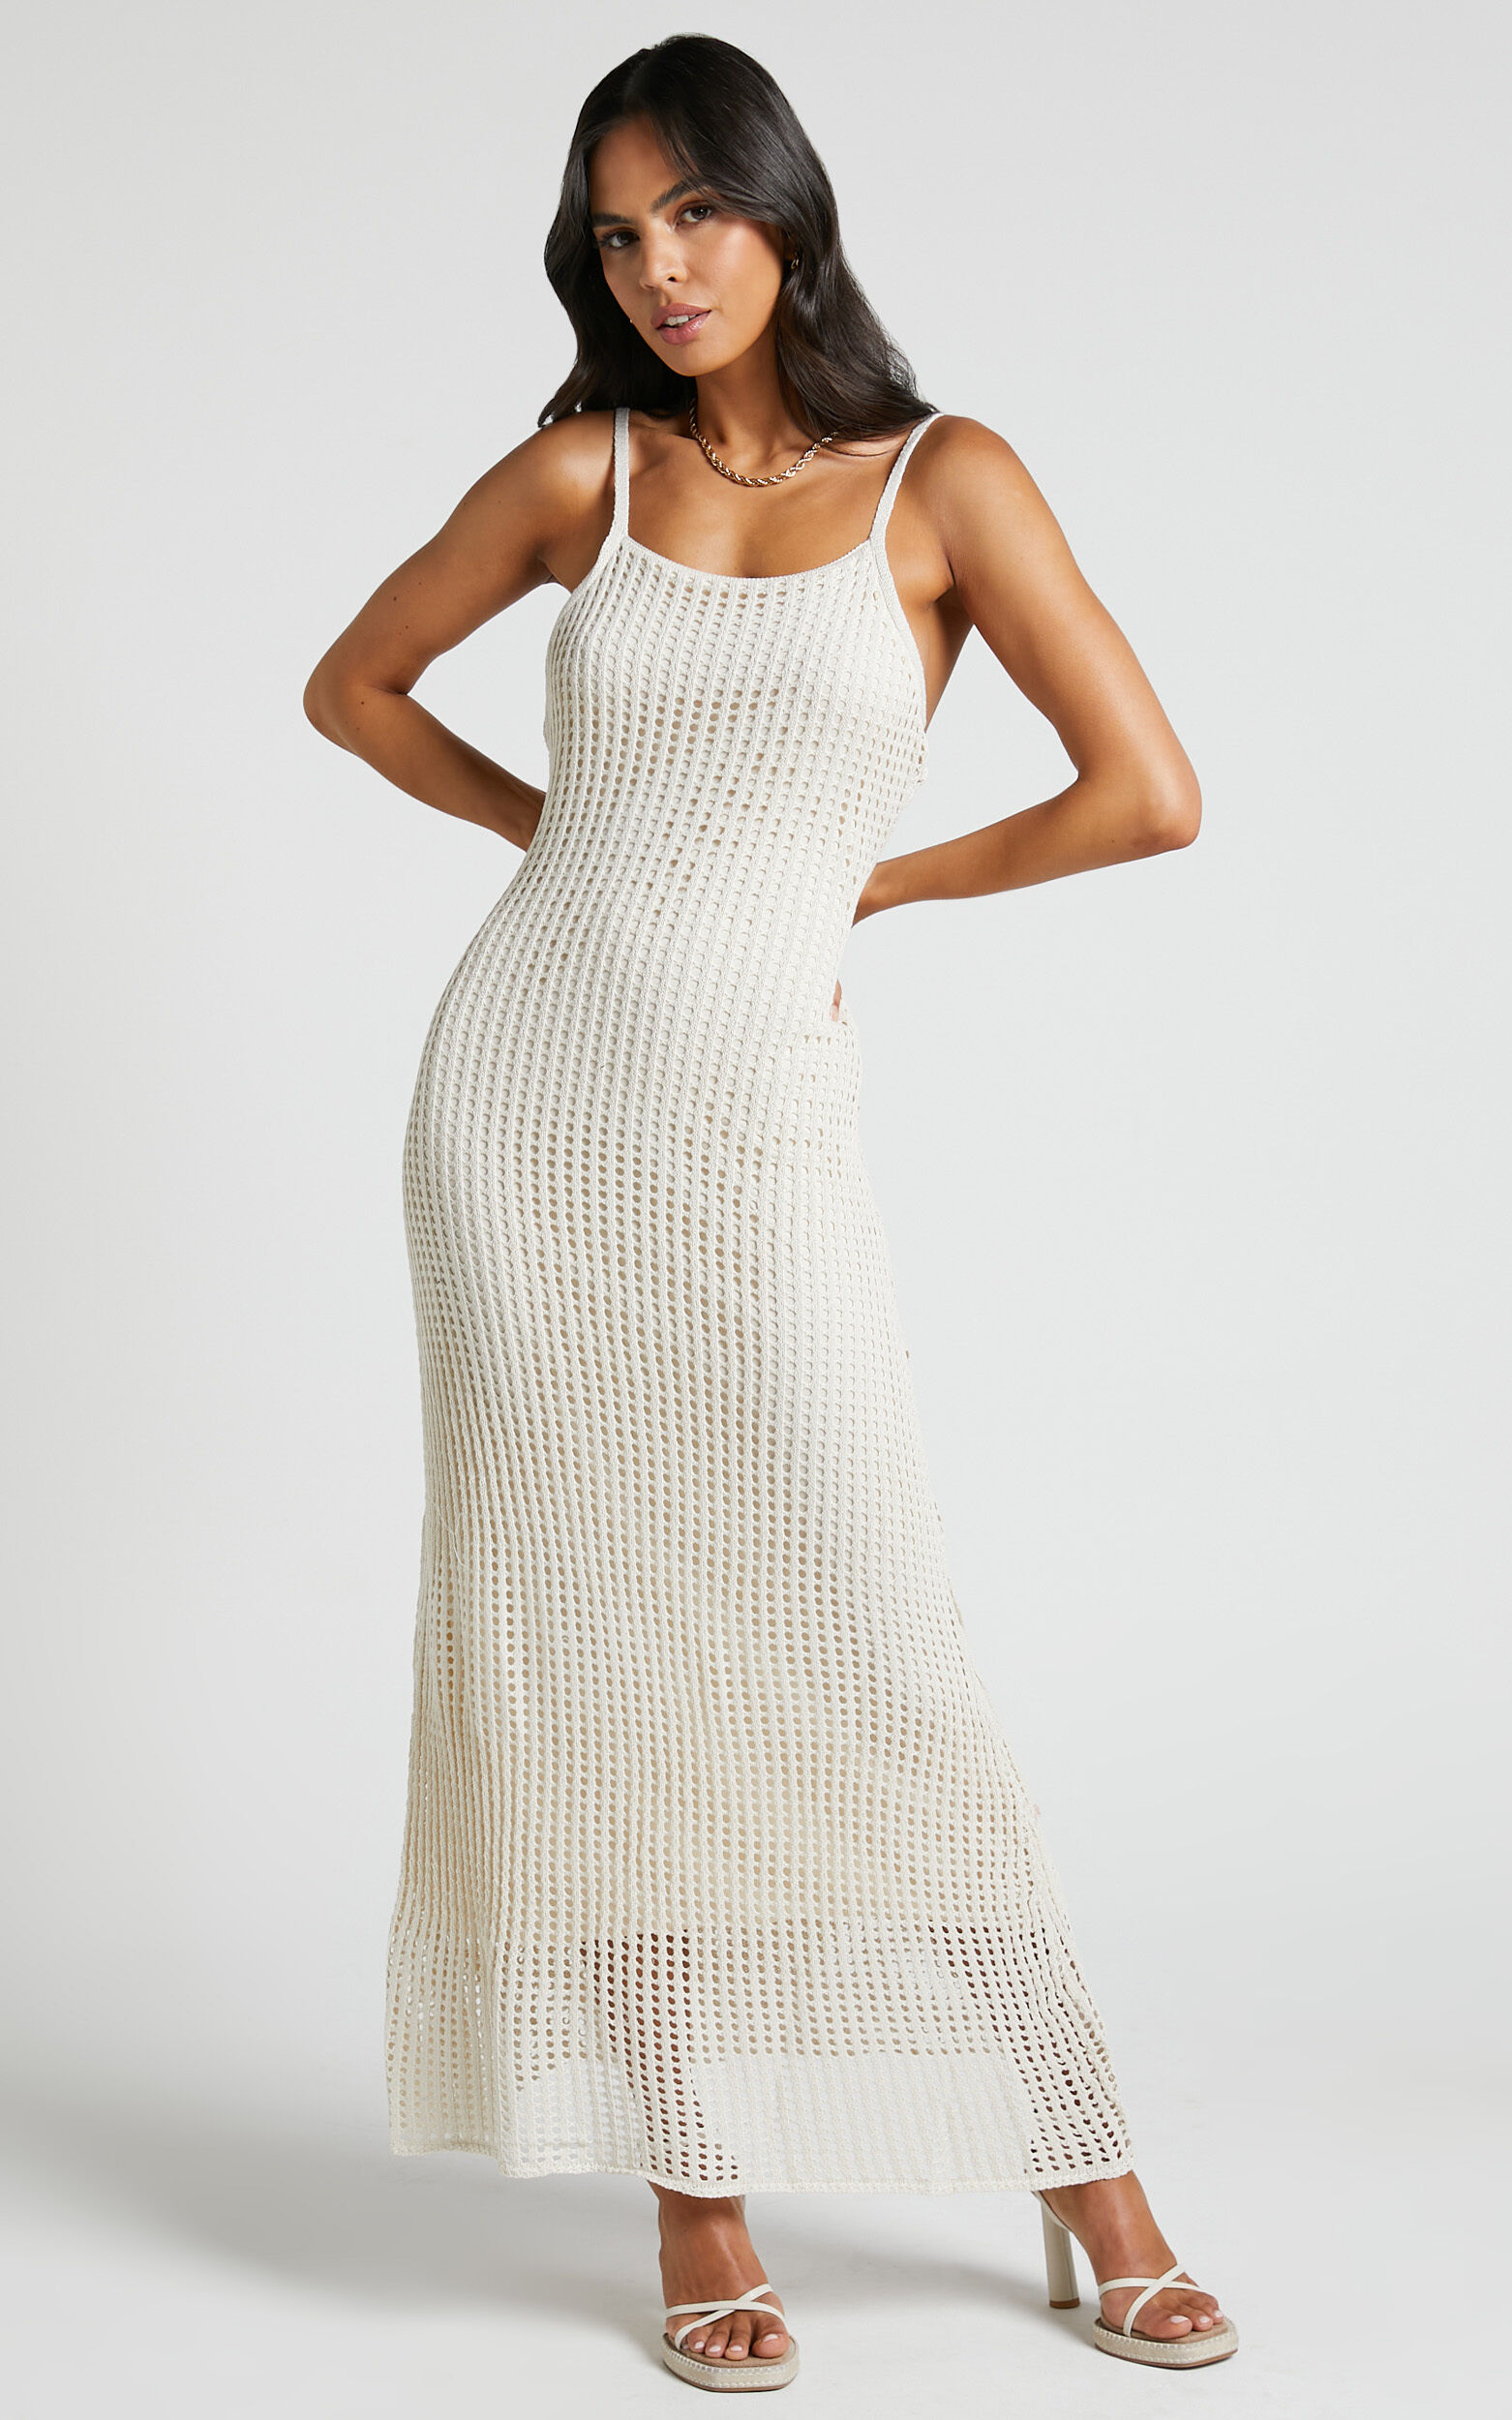 Shana Maxi Dress - Crochet Dress in Beige - L, BRN1, super-hi-res image number null